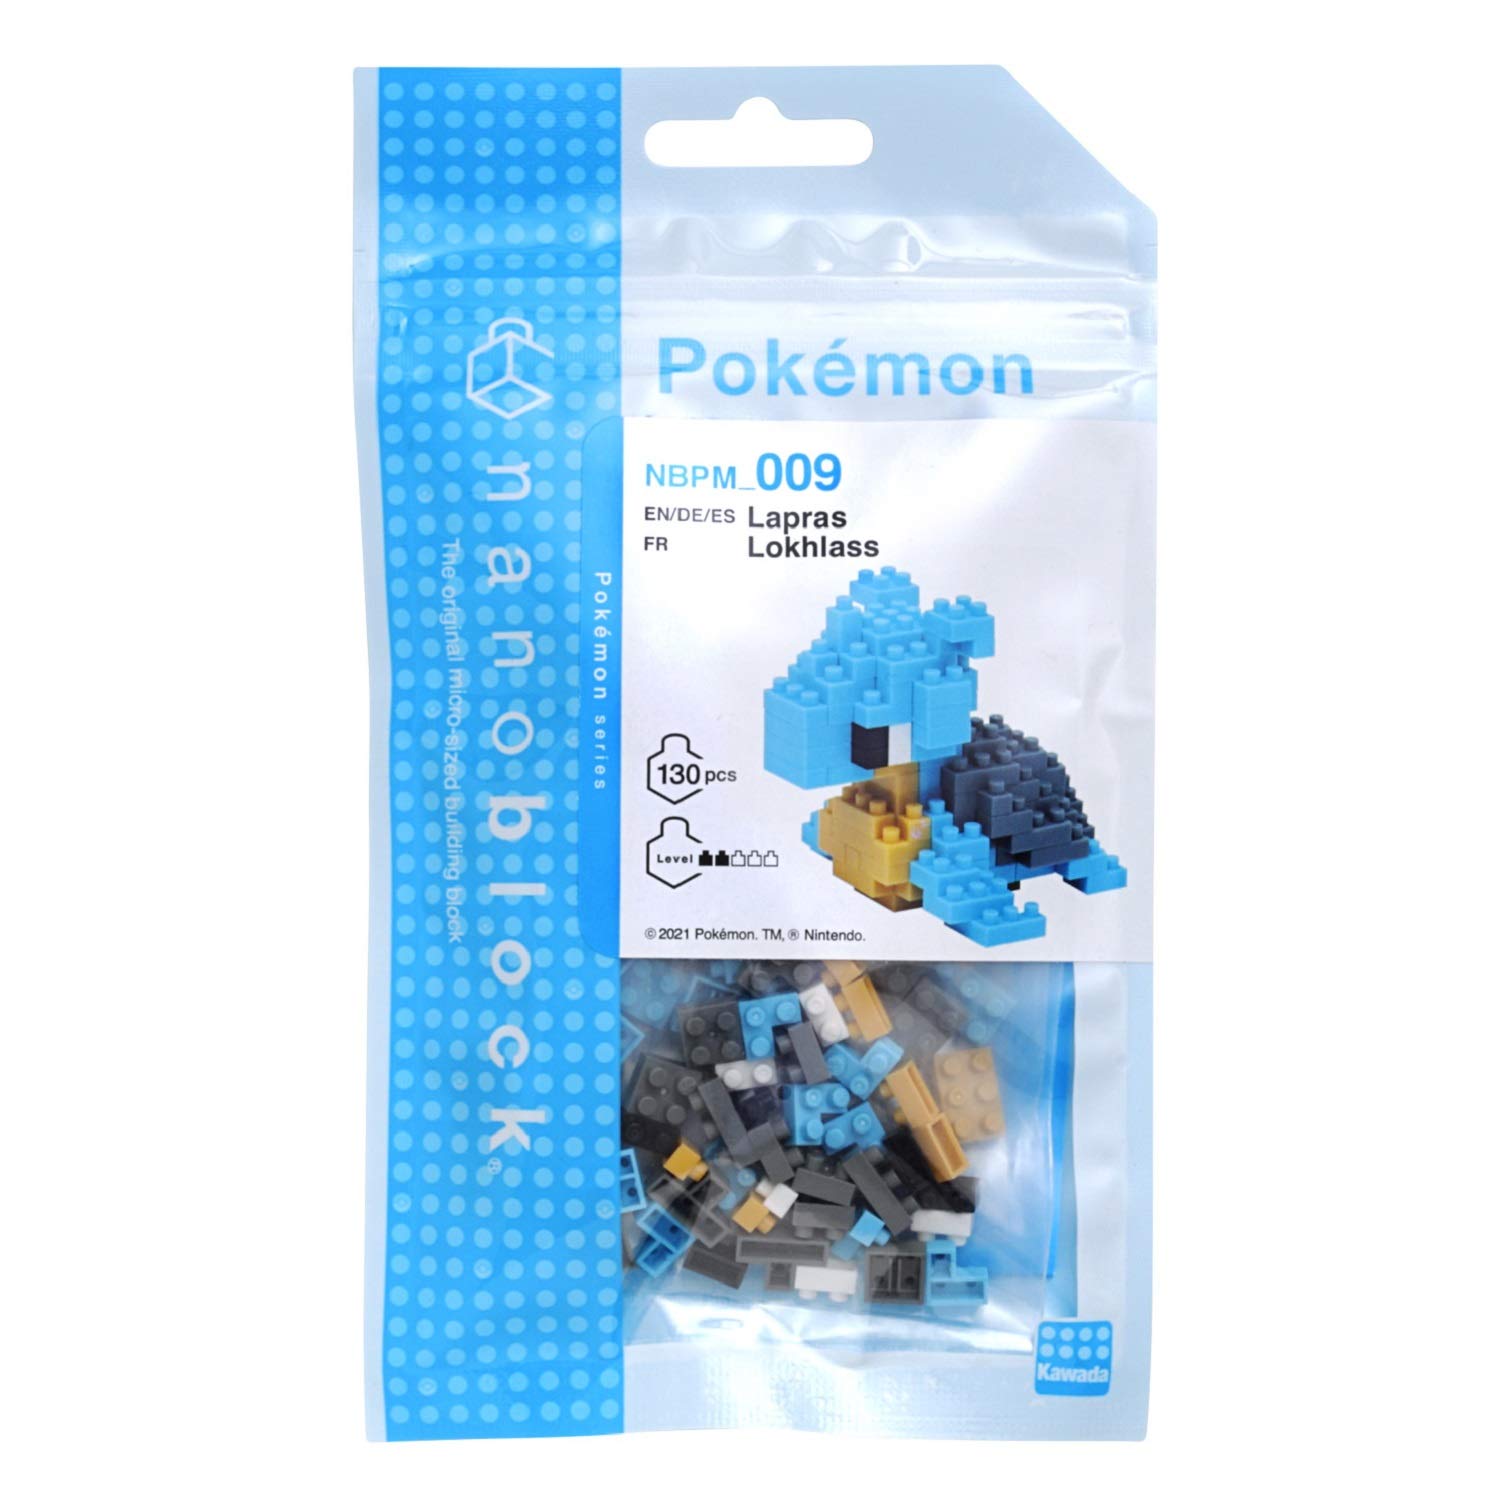 NanoBlock Lapras Pokémon Series Building Kit